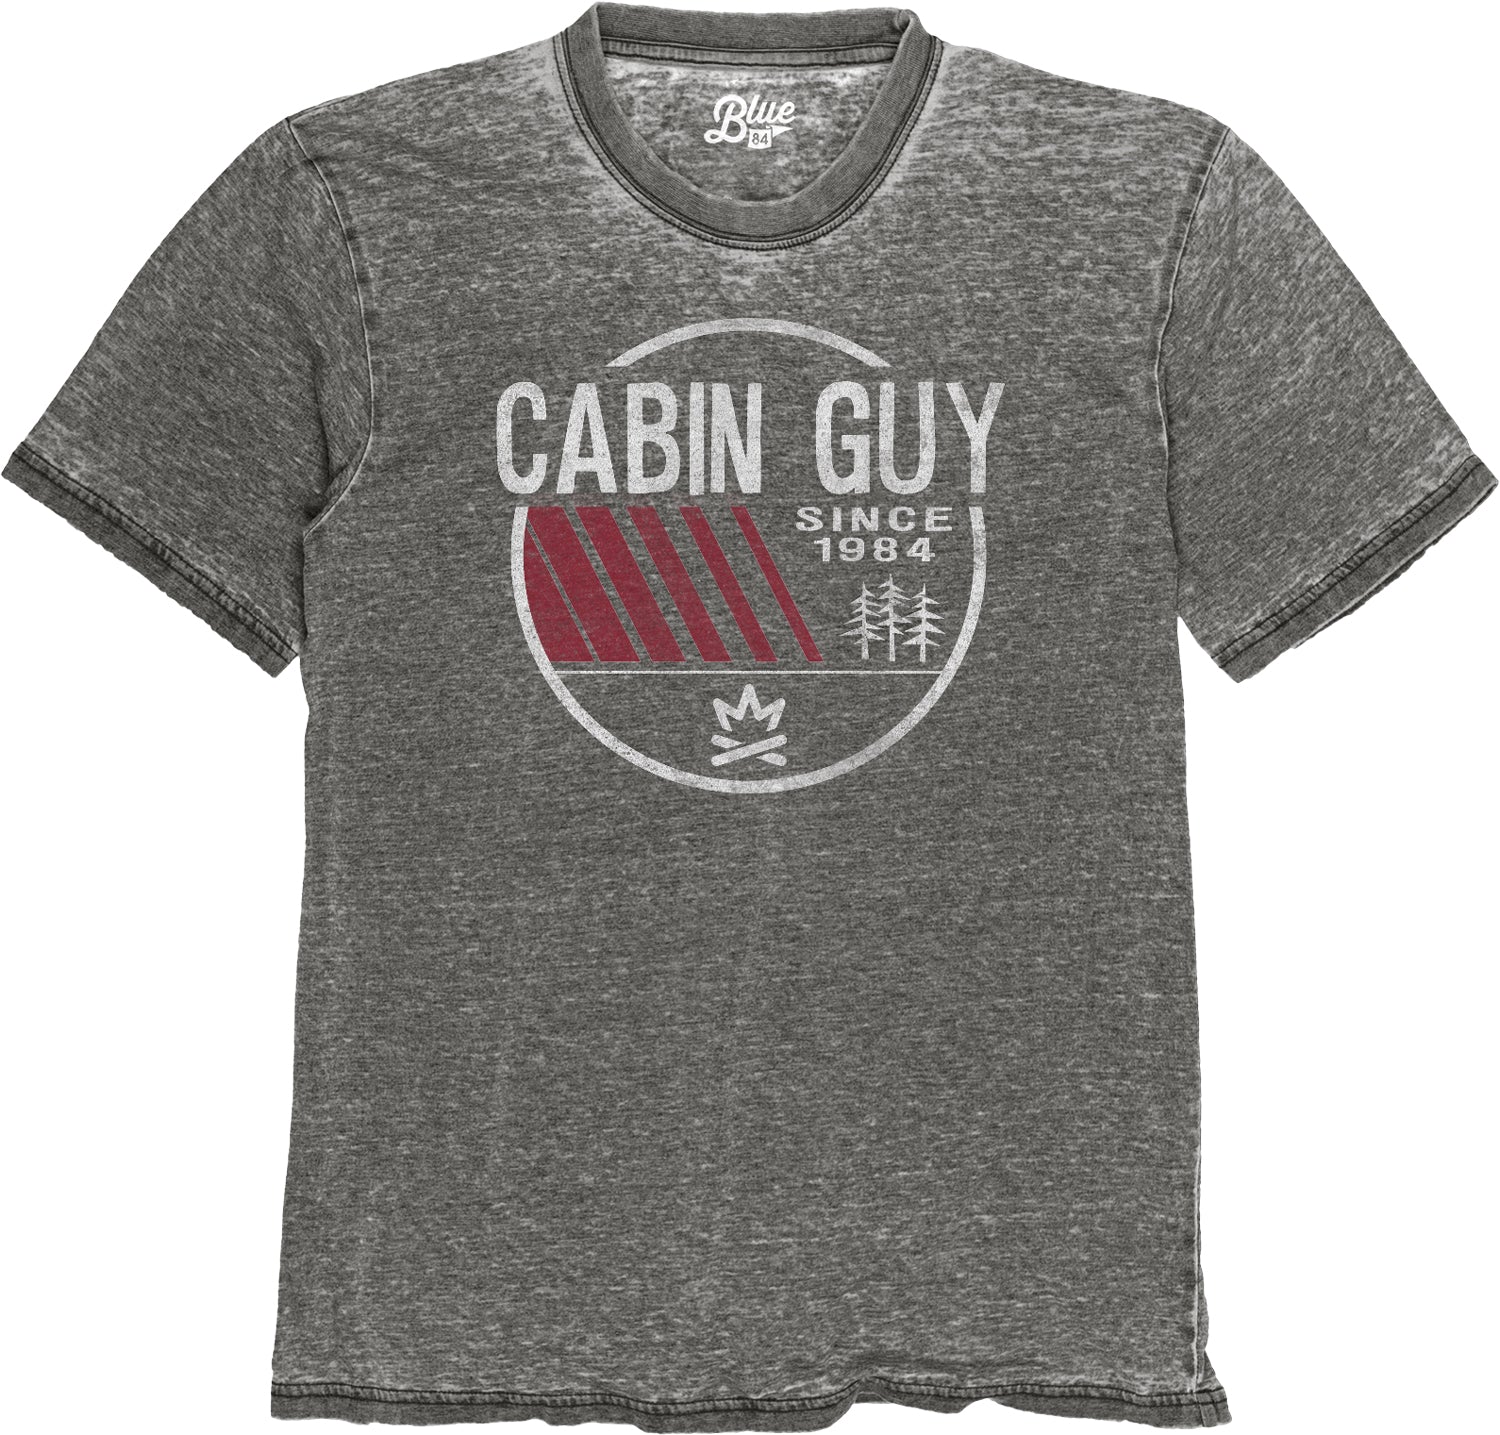 1984 Classic Burnout Washed T-shirt | Cabin Guy